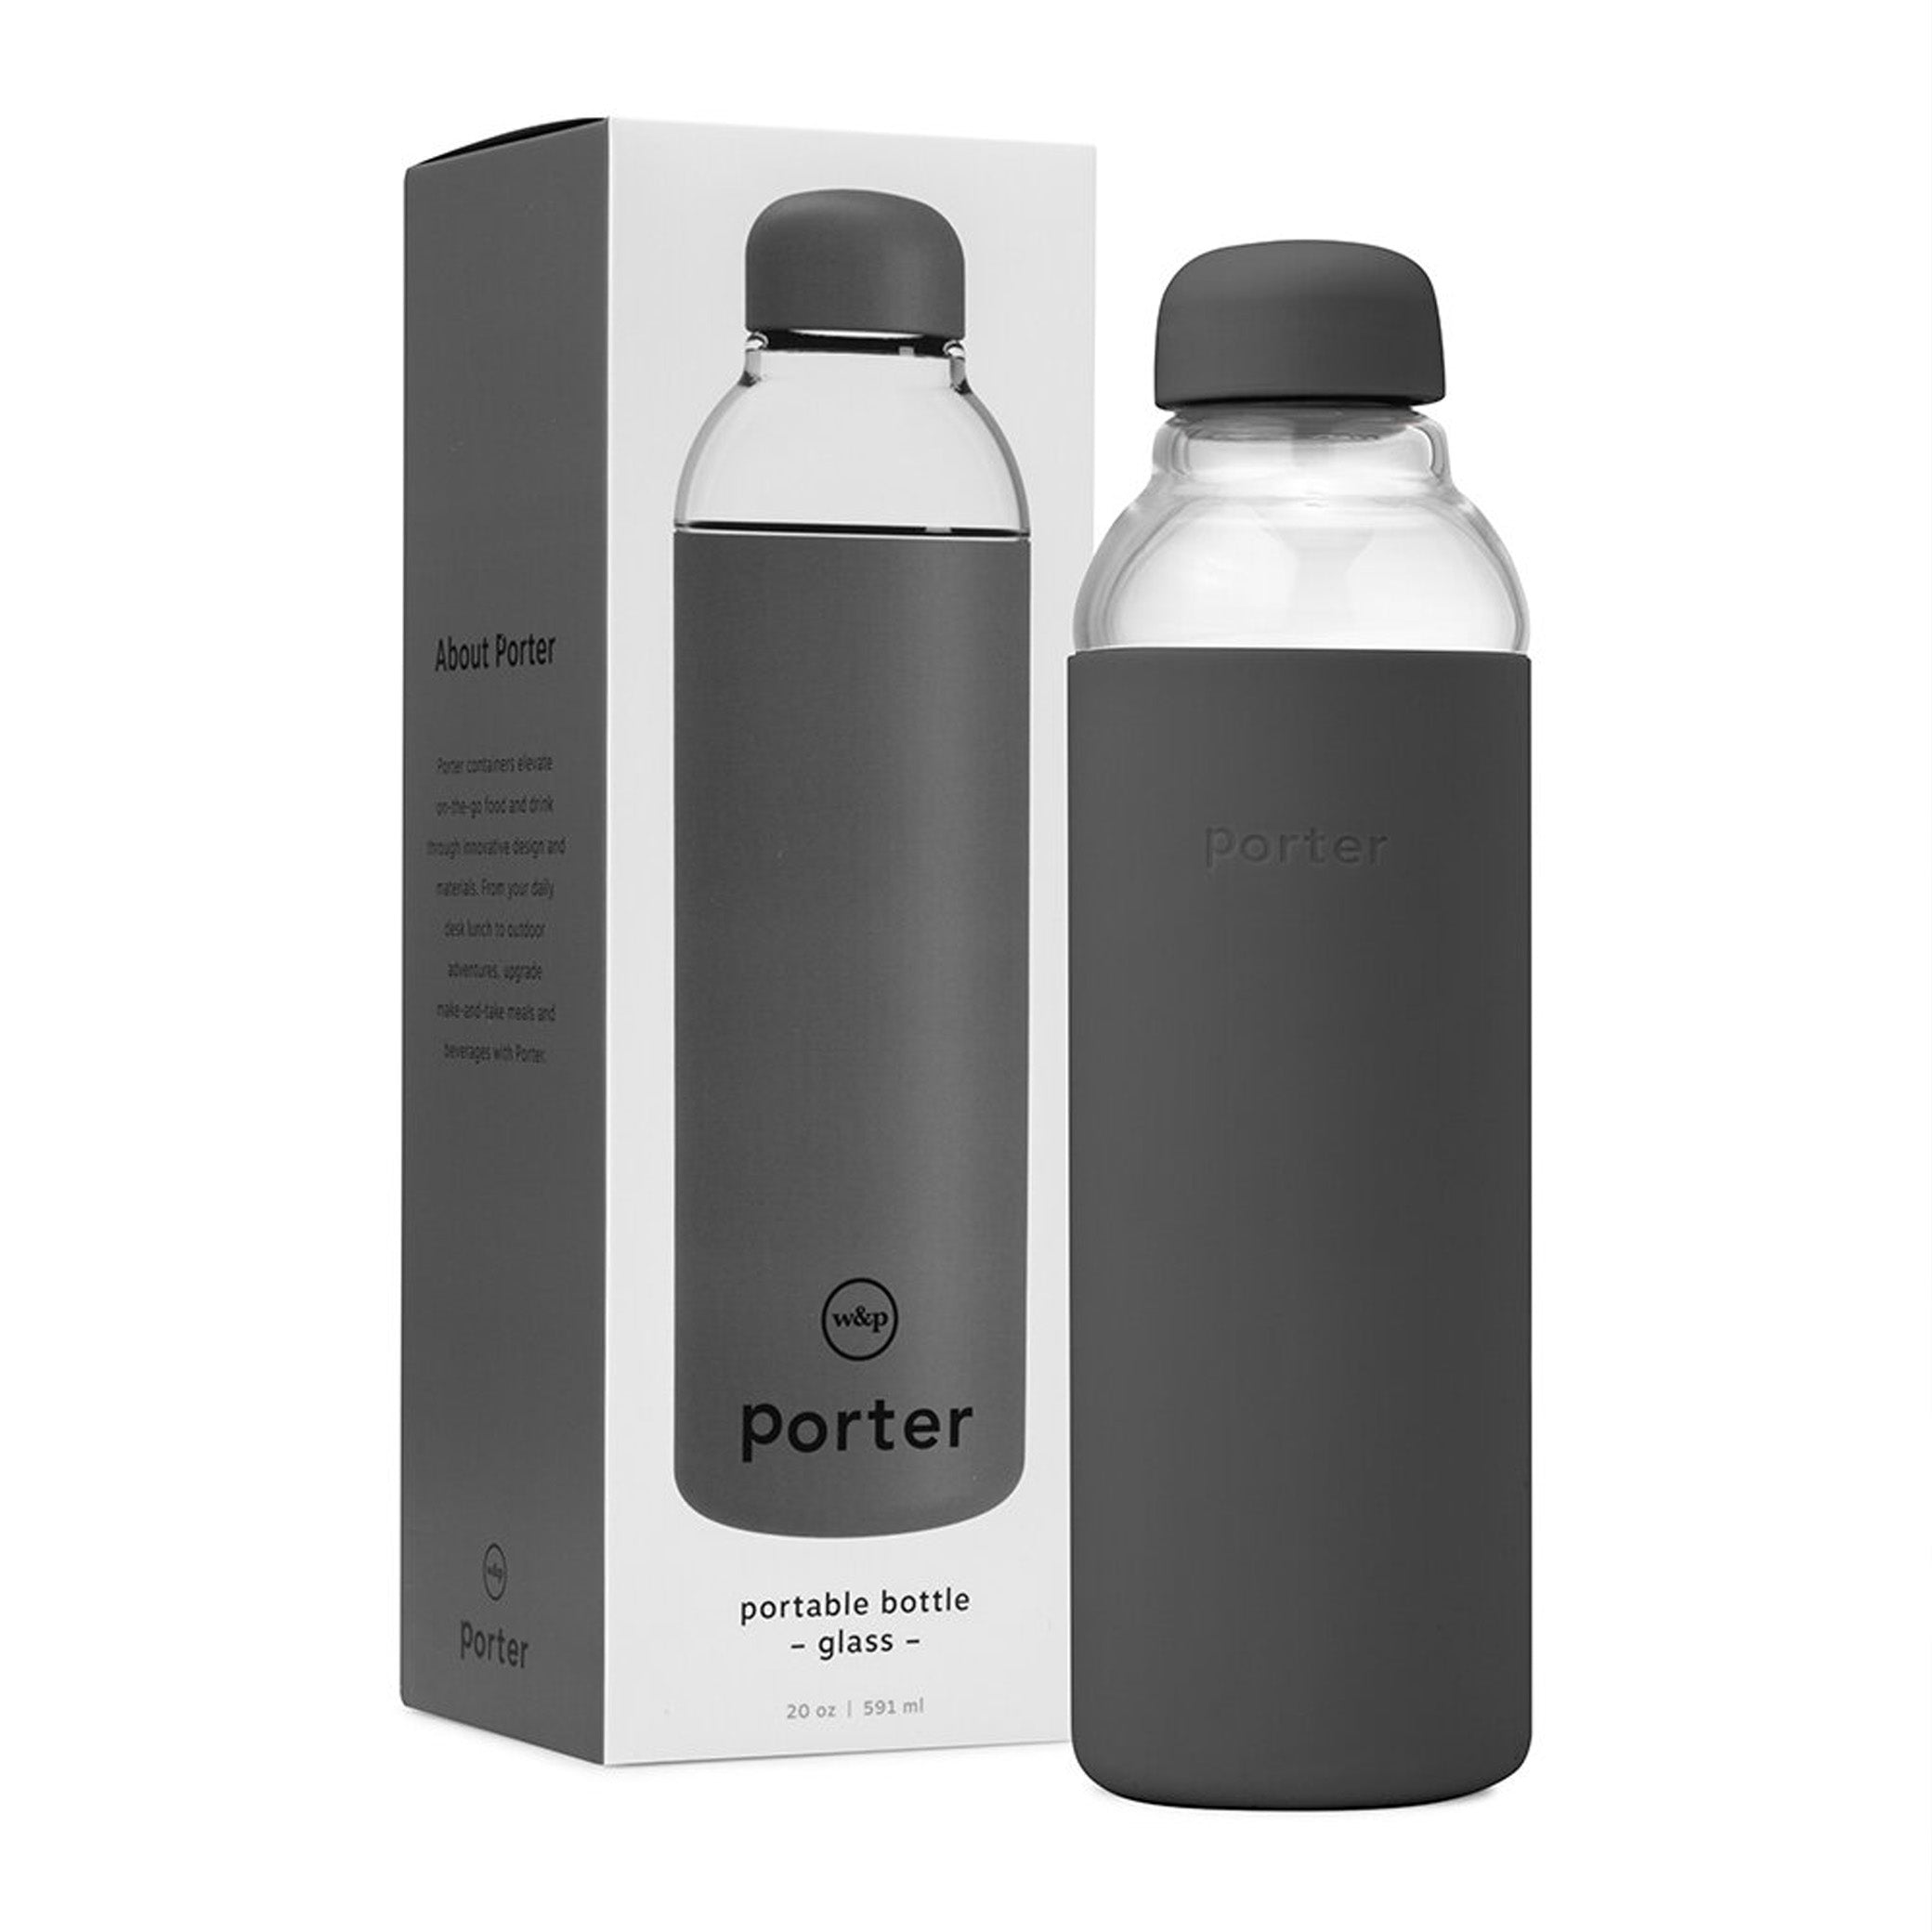 Botella X 1,5 litros - Agua Purificada Mayu